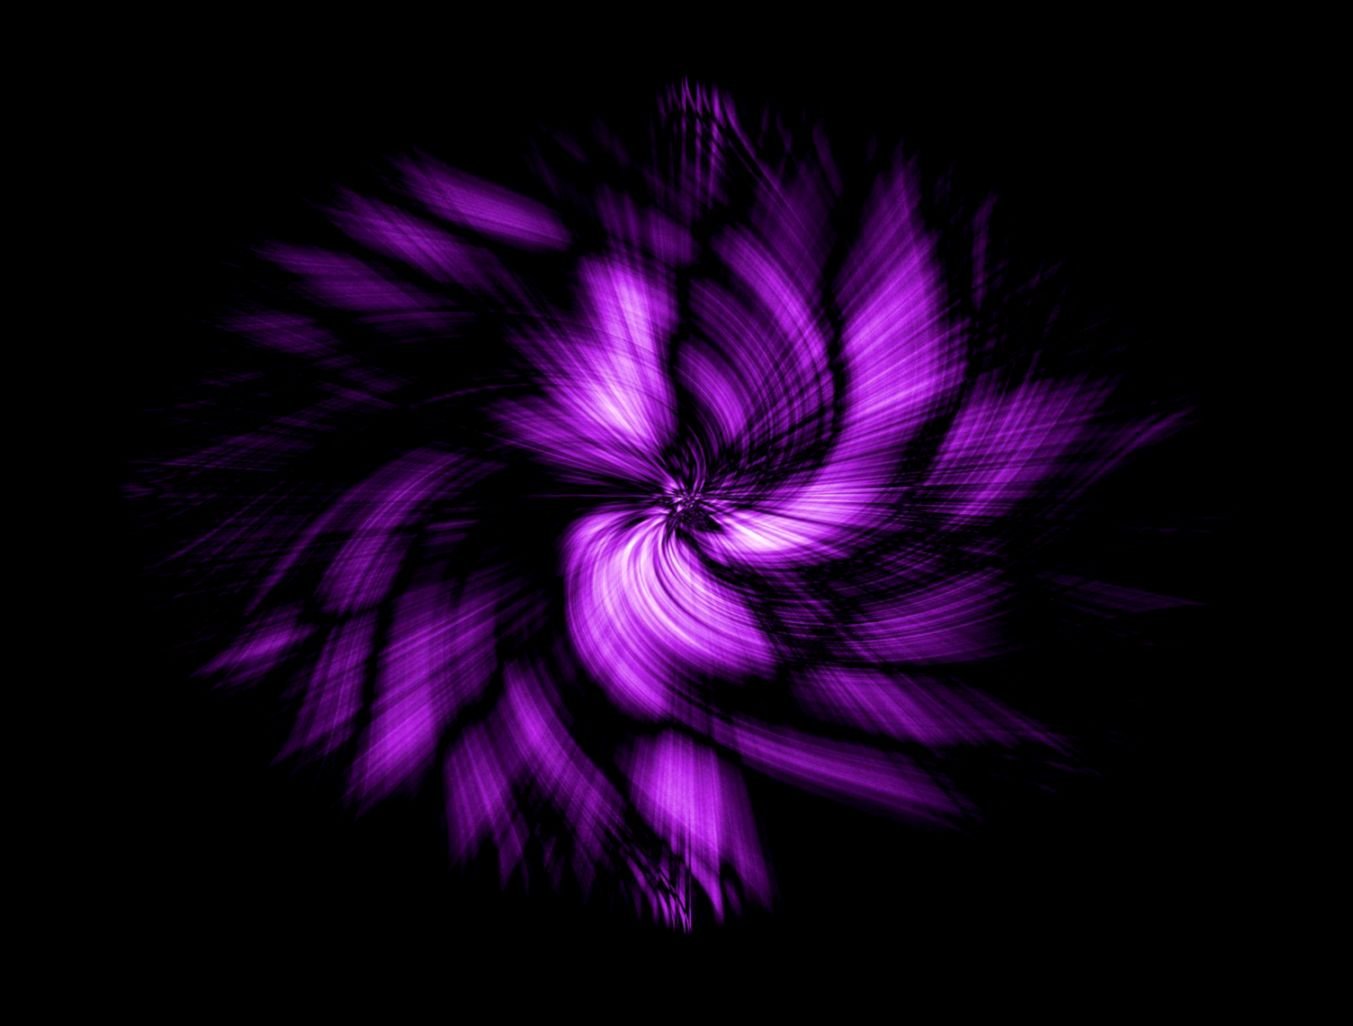 fond d'écran fond d'écran,violet,violet,noir,art fractal,ténèbres